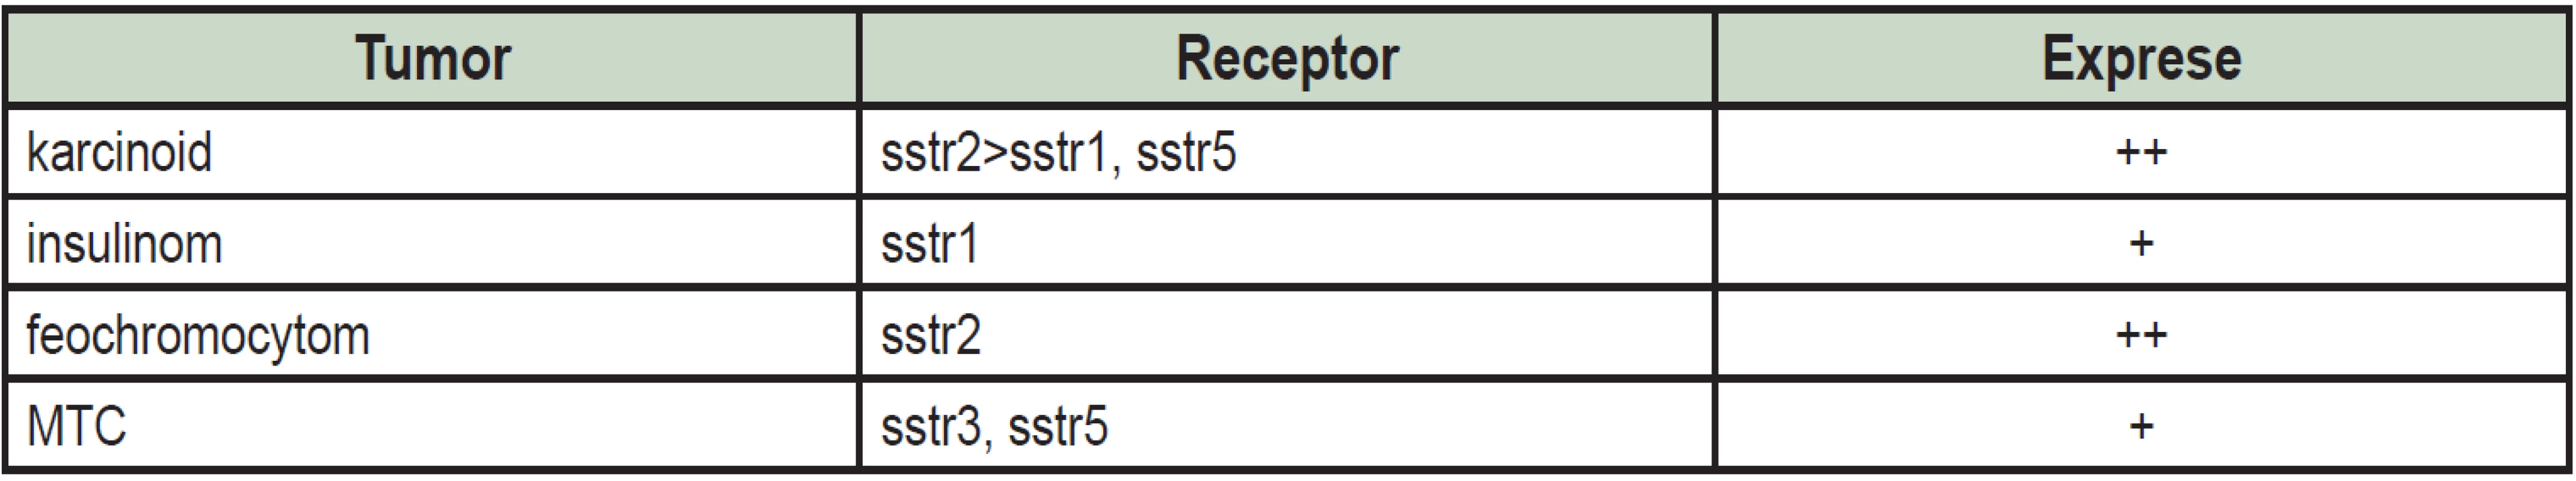 Exprese somatostatinových receptorů u neuroendokrinních tumorů &lt;sup&gt;7&lt;/sup&gt;.